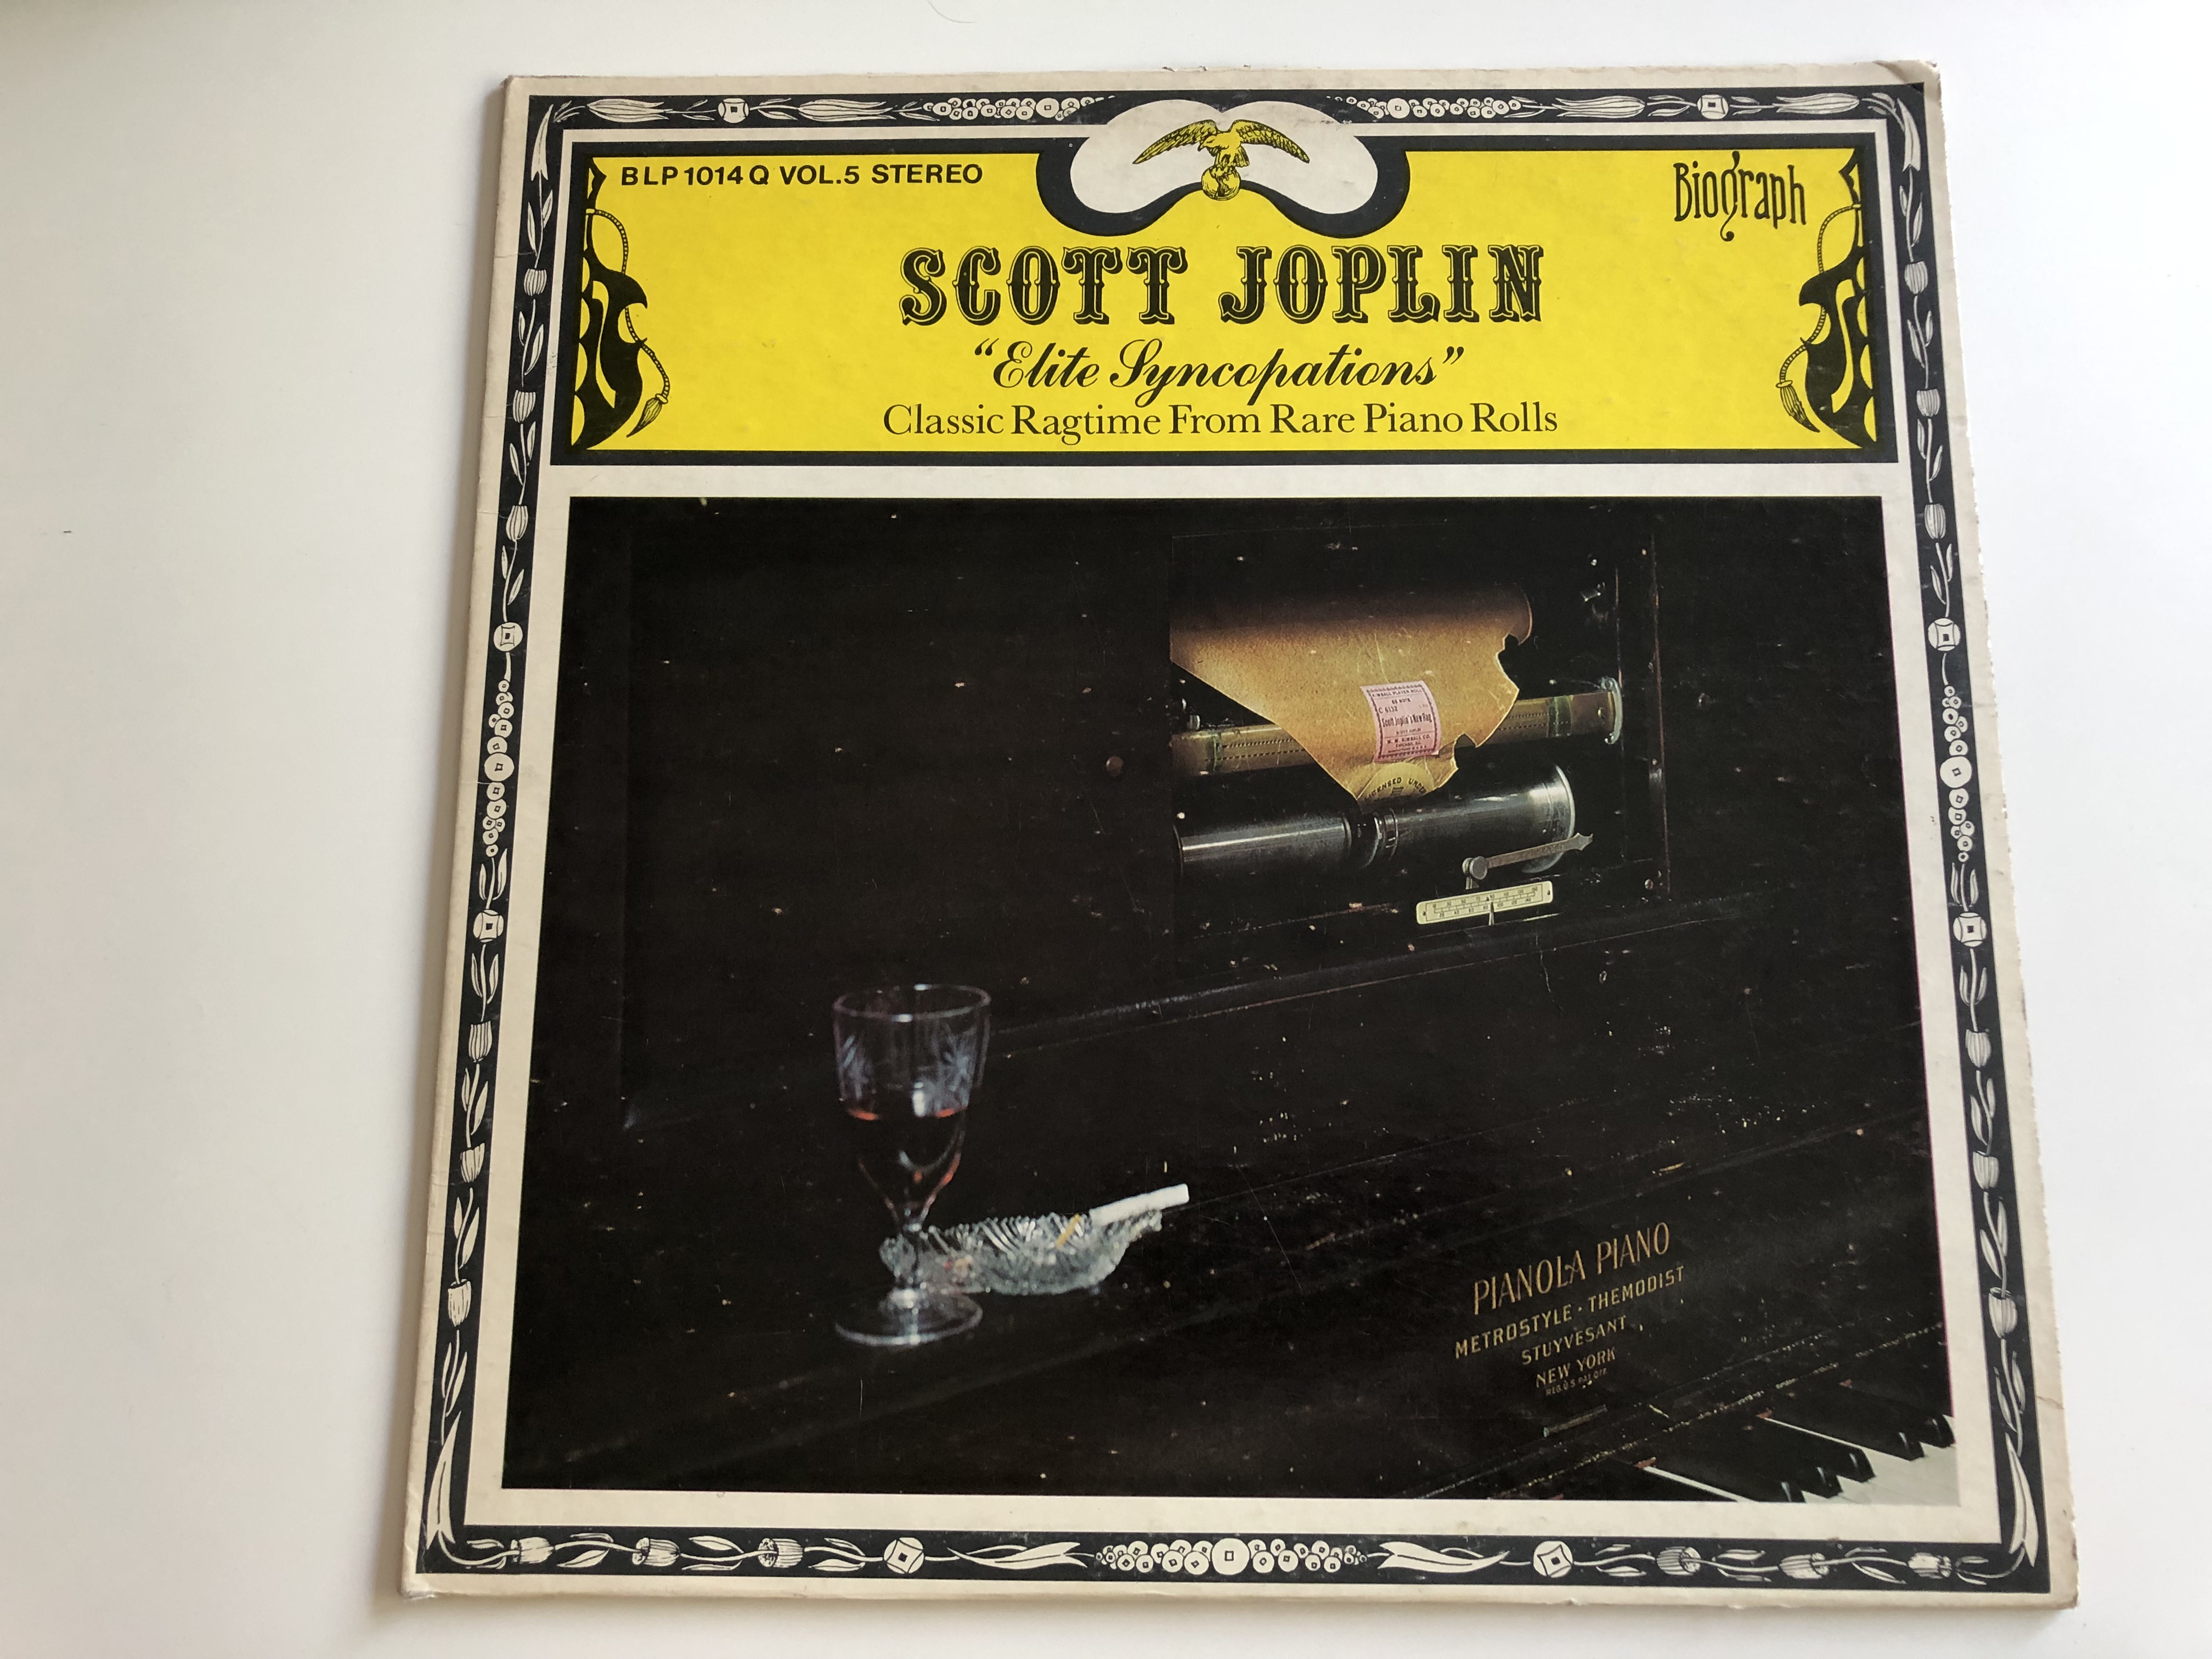 scott-joplin-elite-syncopations-classic-ragtime-from-rare-piano-rolls-vol.5-biograph-lp-stereo-blp-1014q-1-.jpg